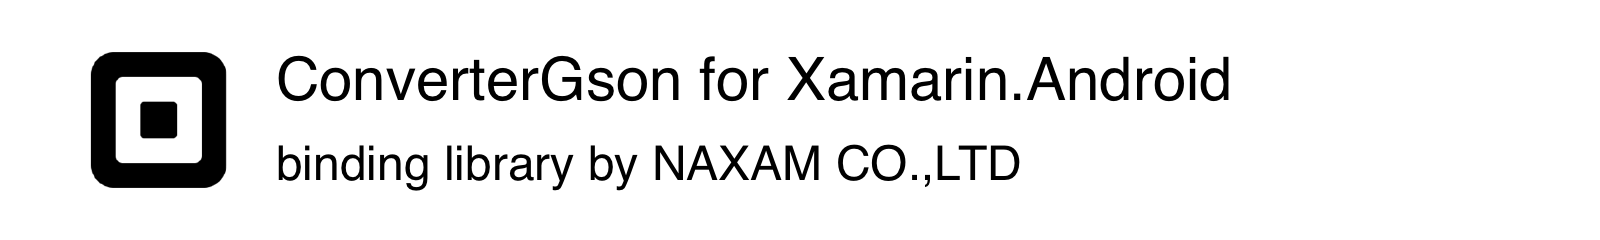 Converter Gson for Xamarin.Android